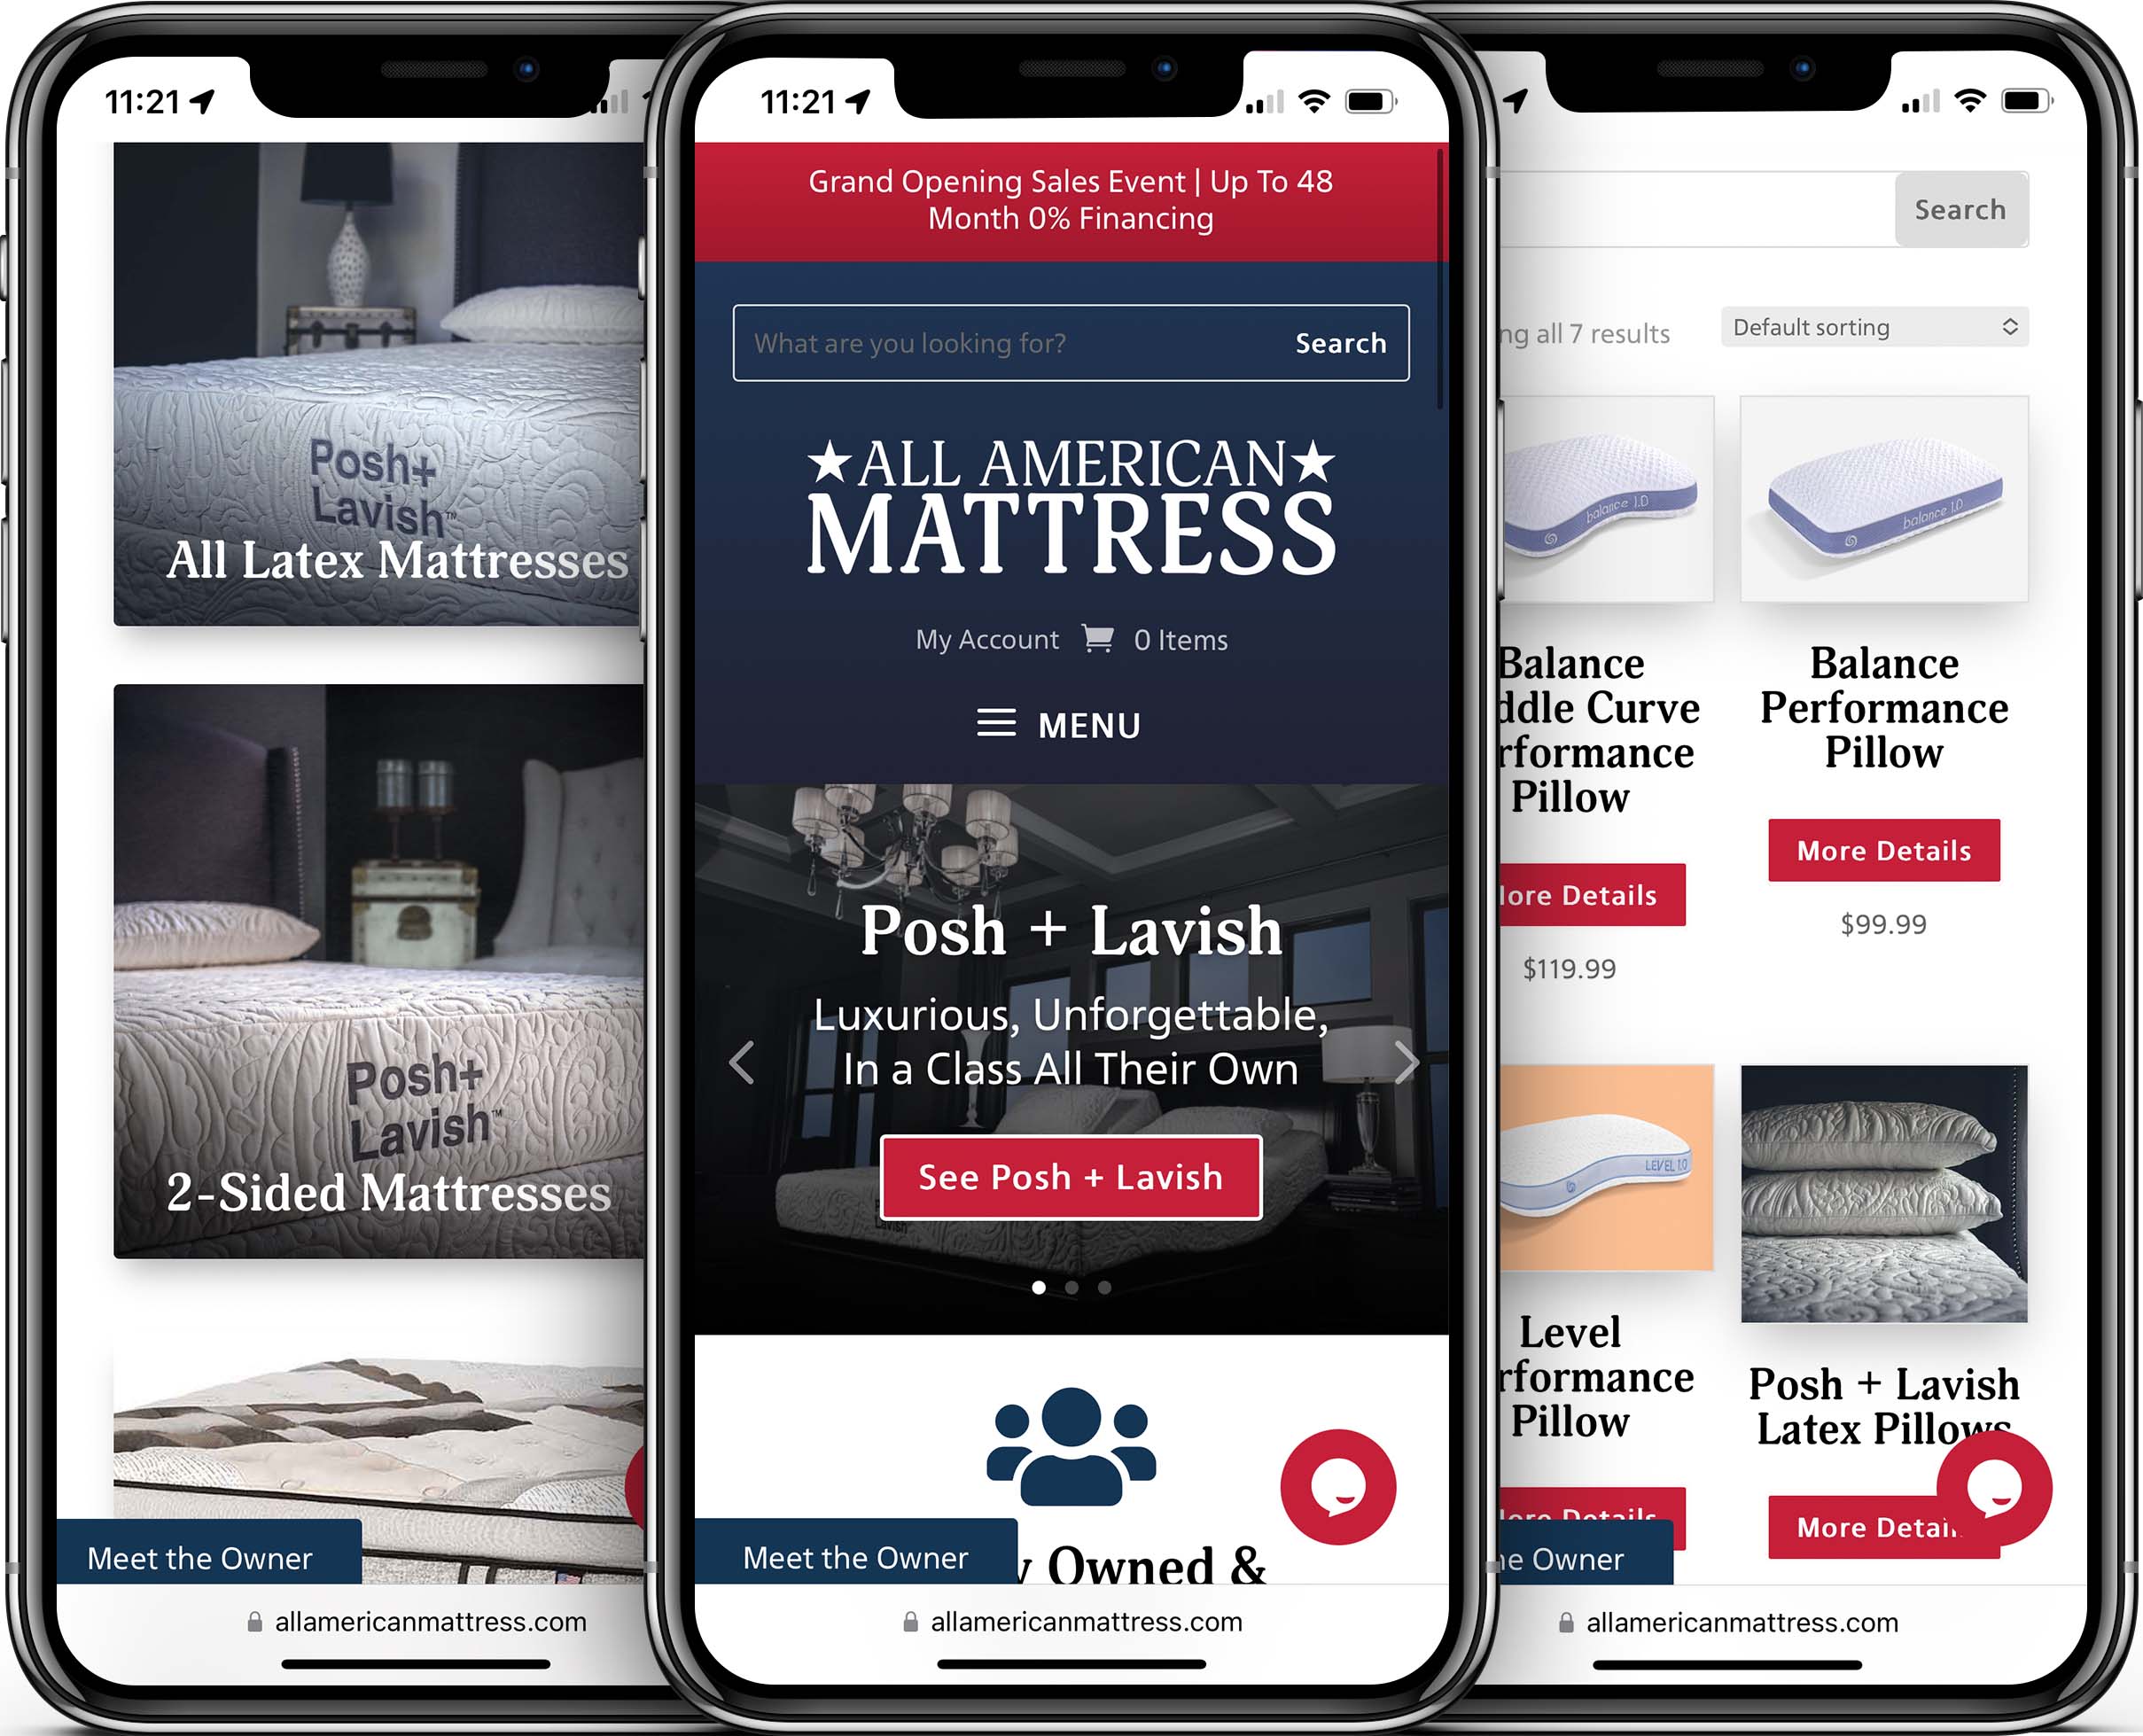 All American Mattress Mobile-Friendly Web Design